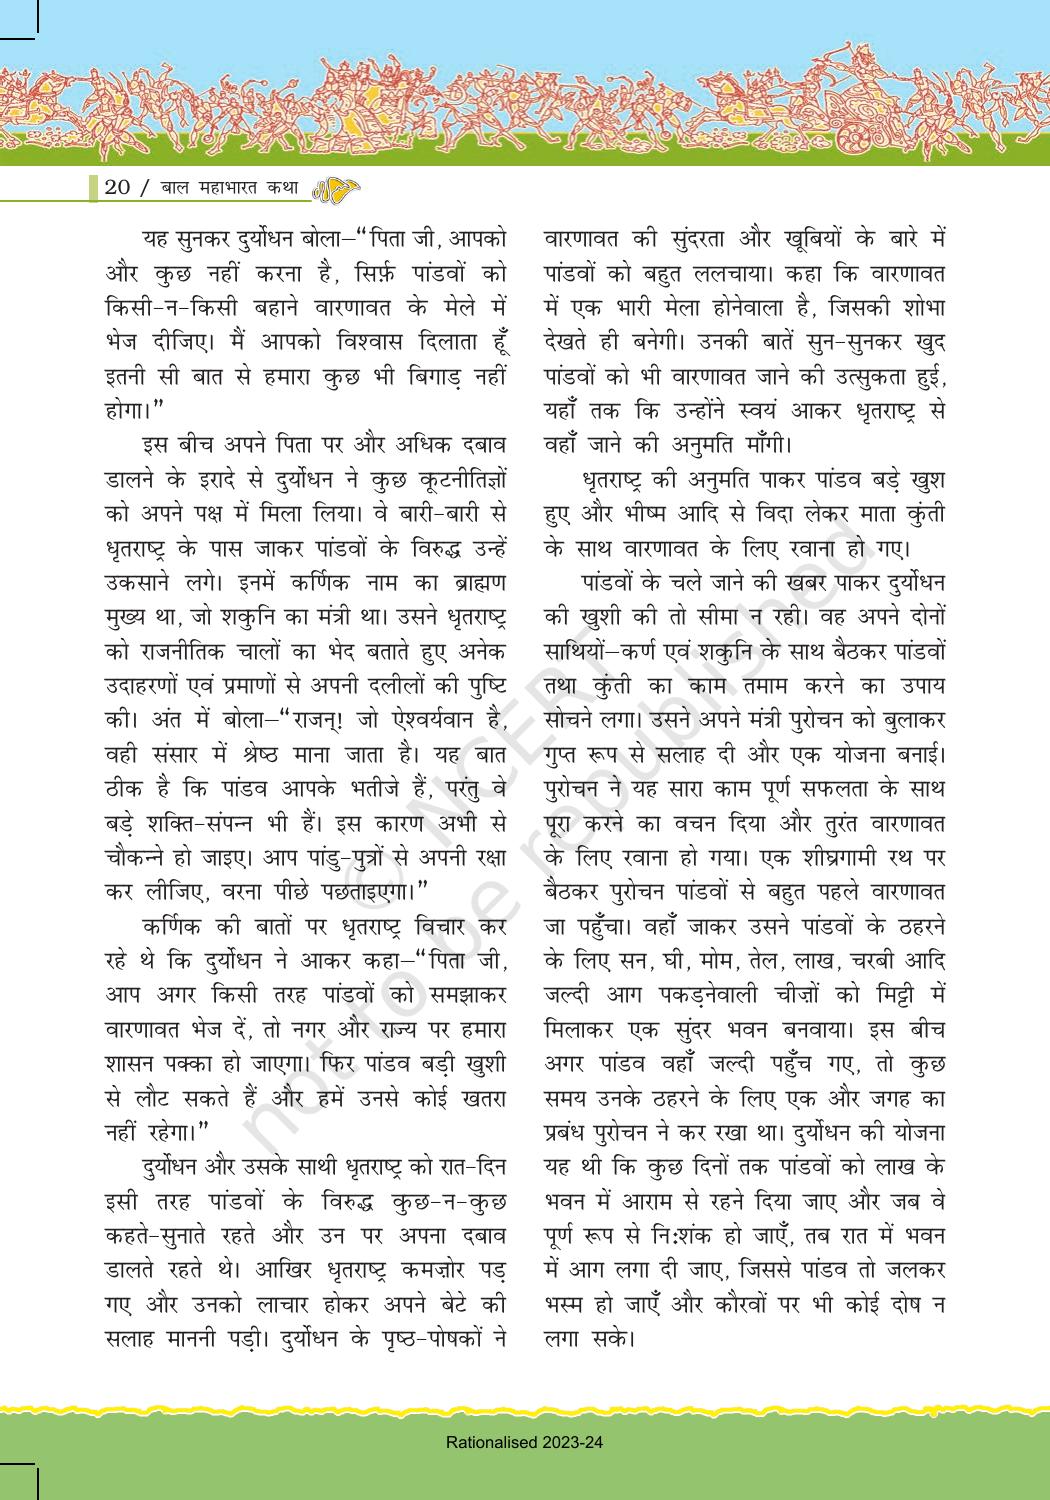 NCERT Book for Class 7 Hindi: Chapter 1-बाल महाभारत कथा - Page 20